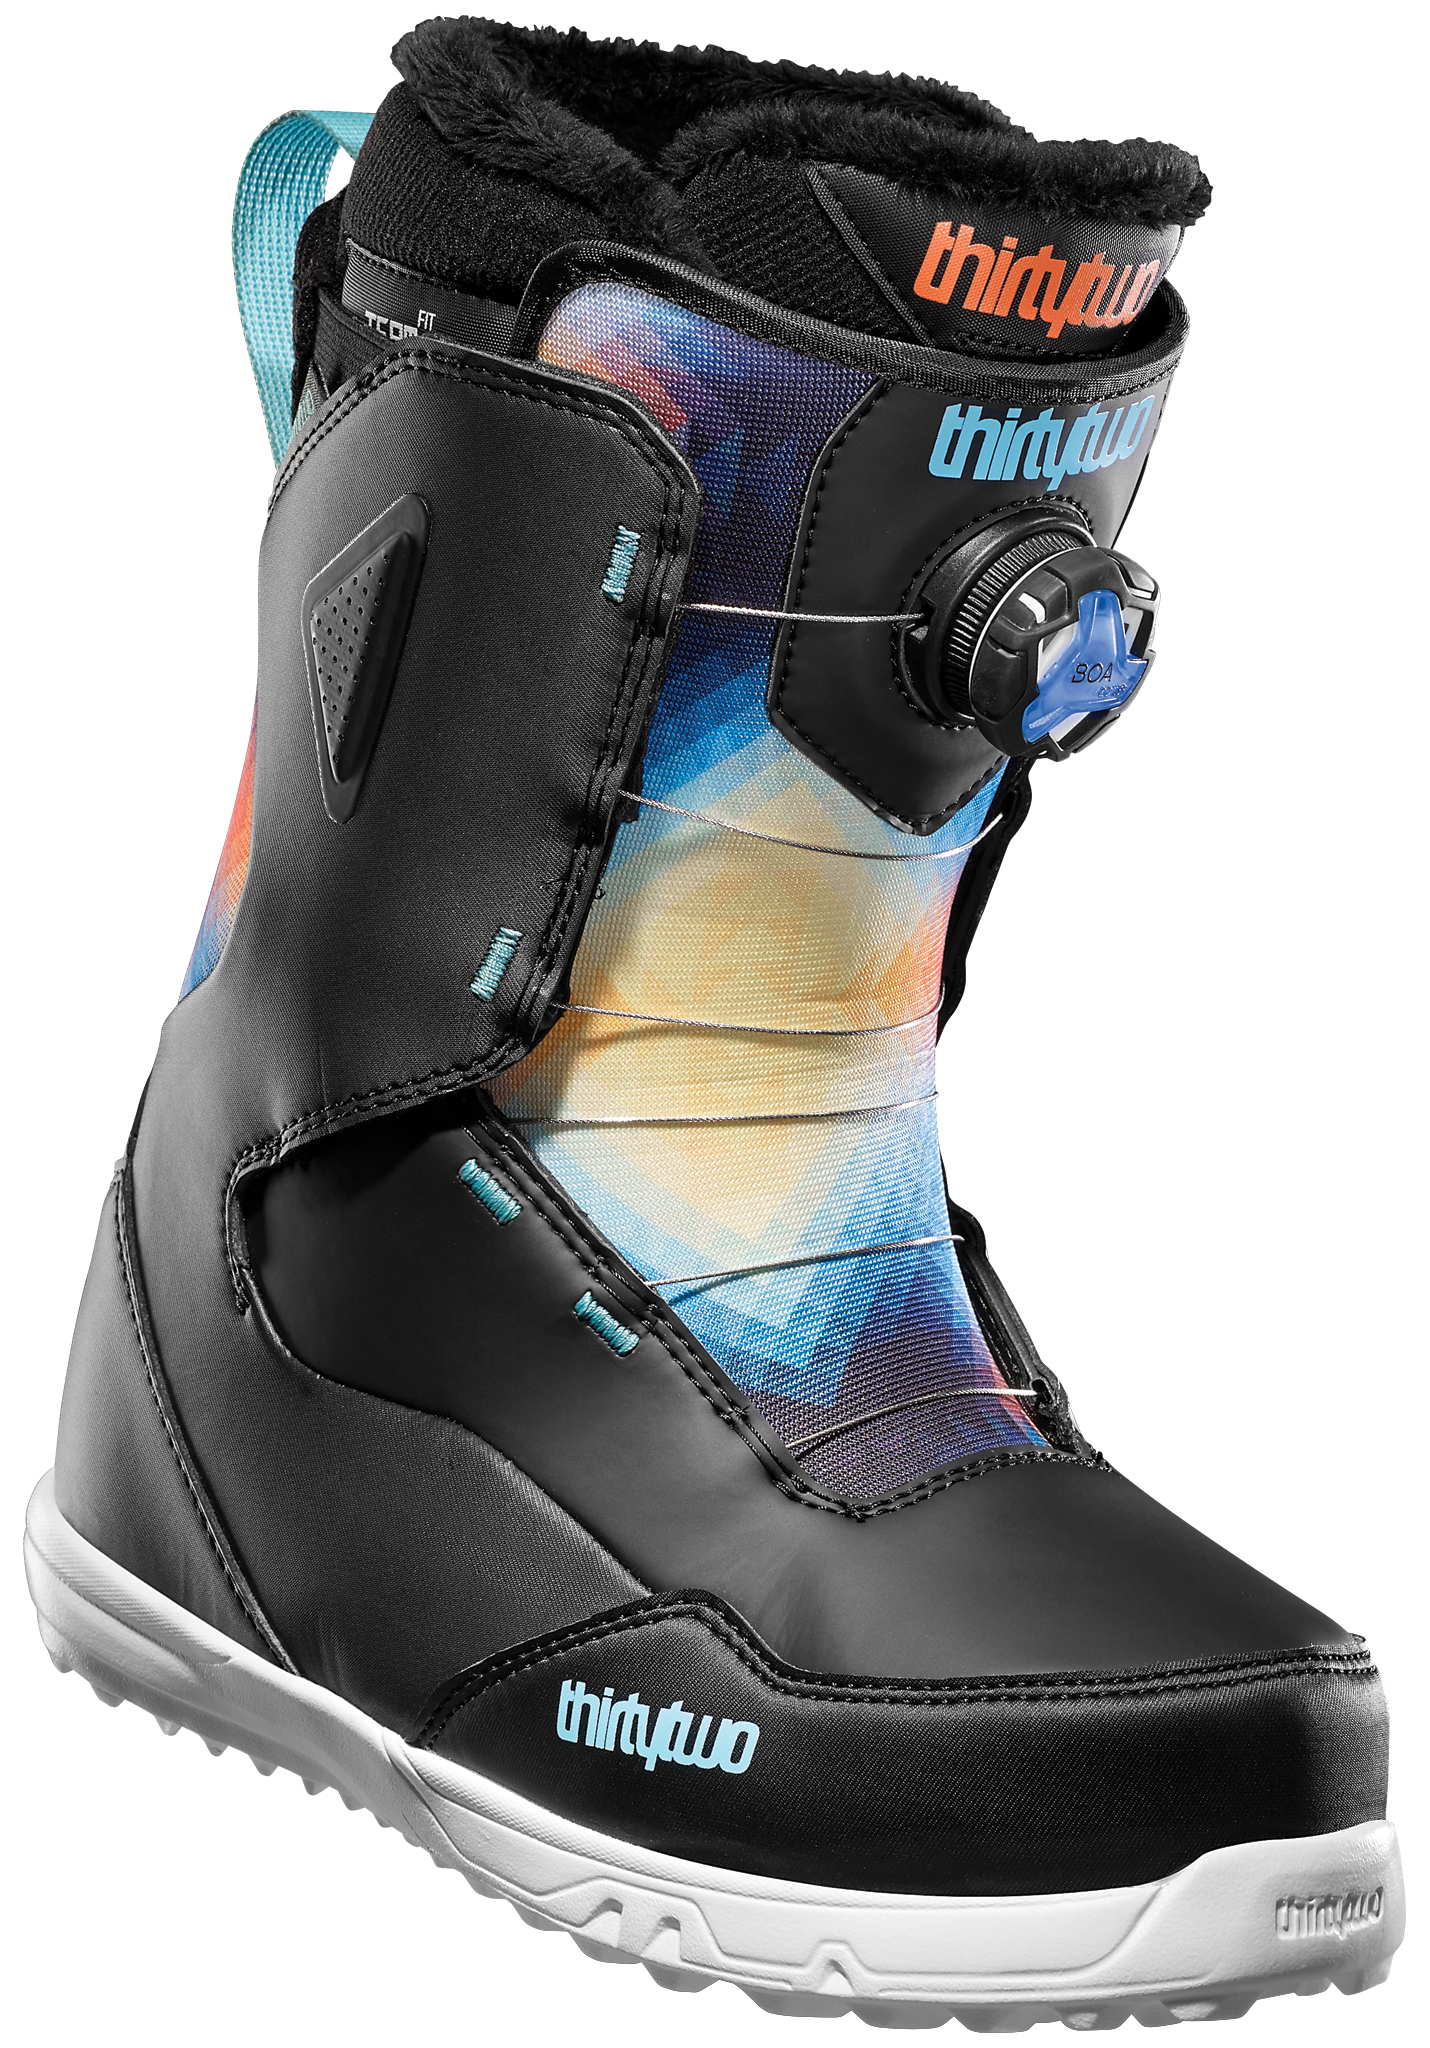 Thirtytwo Zephyr Boa All Mountain Snowboard Boots schwarz/blau/weiß 38,5